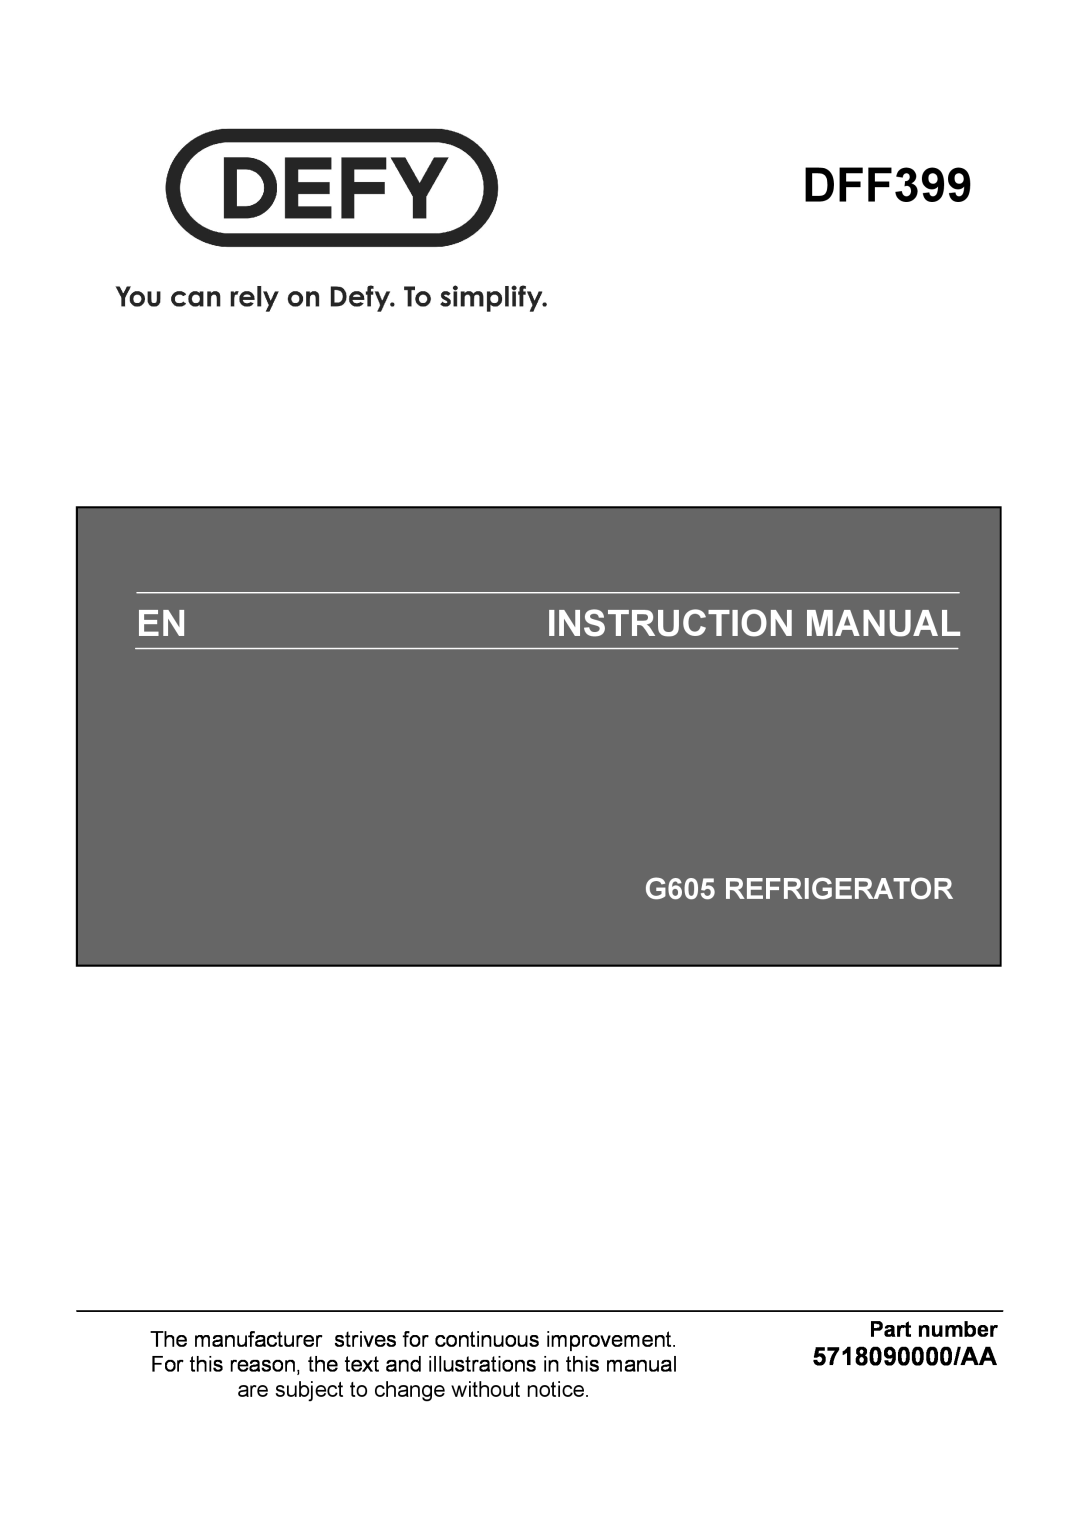 Defy Appliances DFF399 instruction manual G605 REFRIGERATOR, 5718090000/AA 